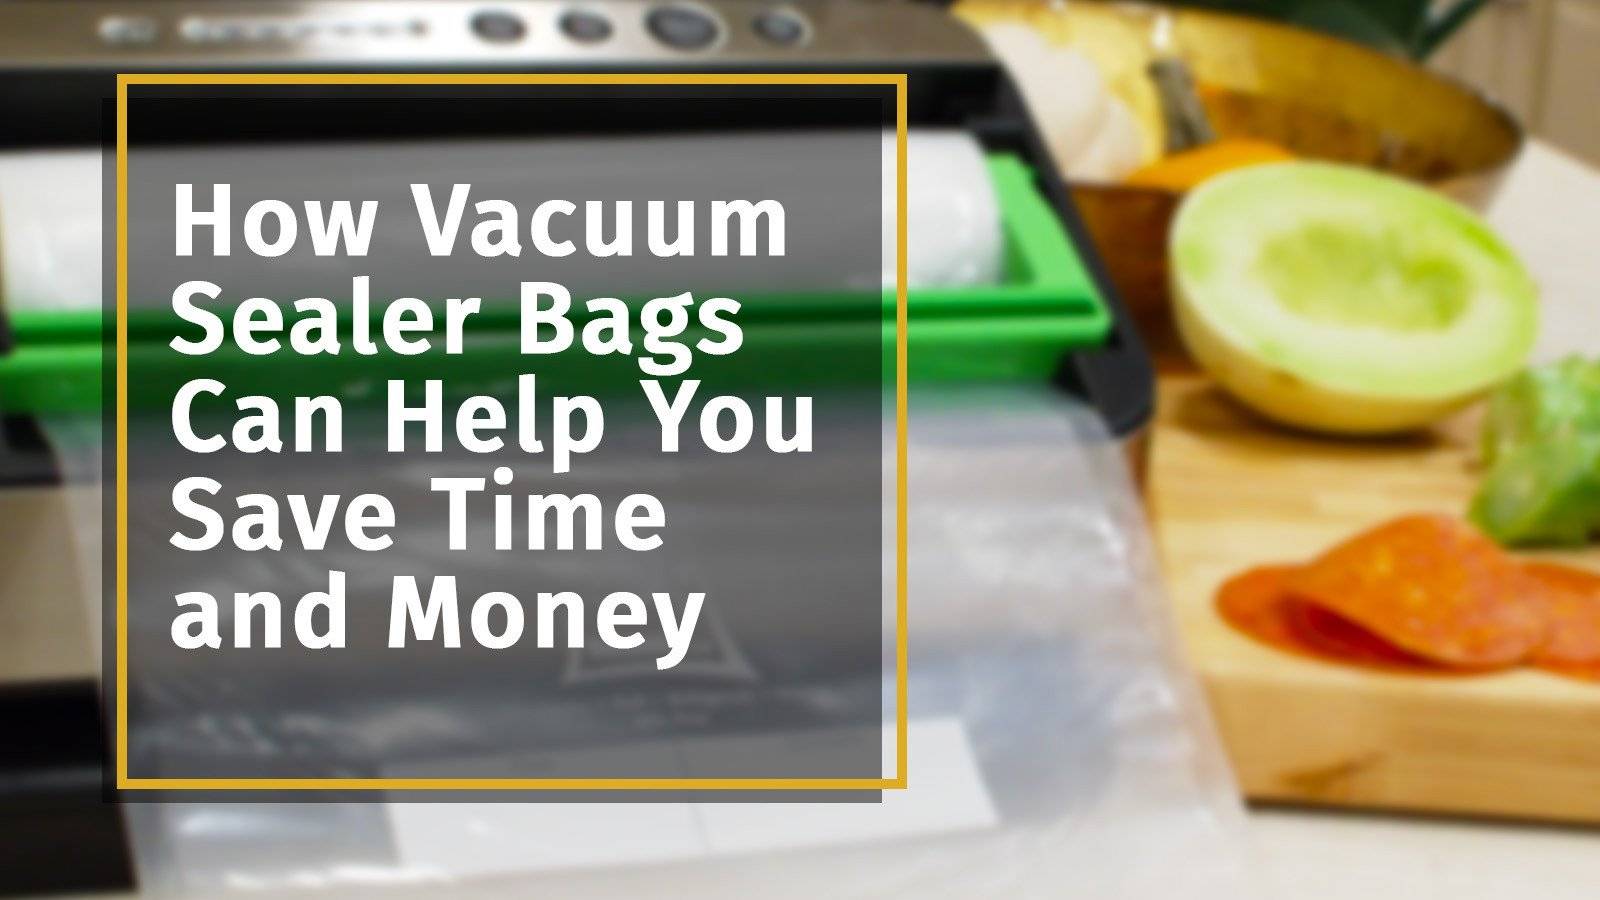 Vacuum Sealer Tips & How-To's, FoodSaver